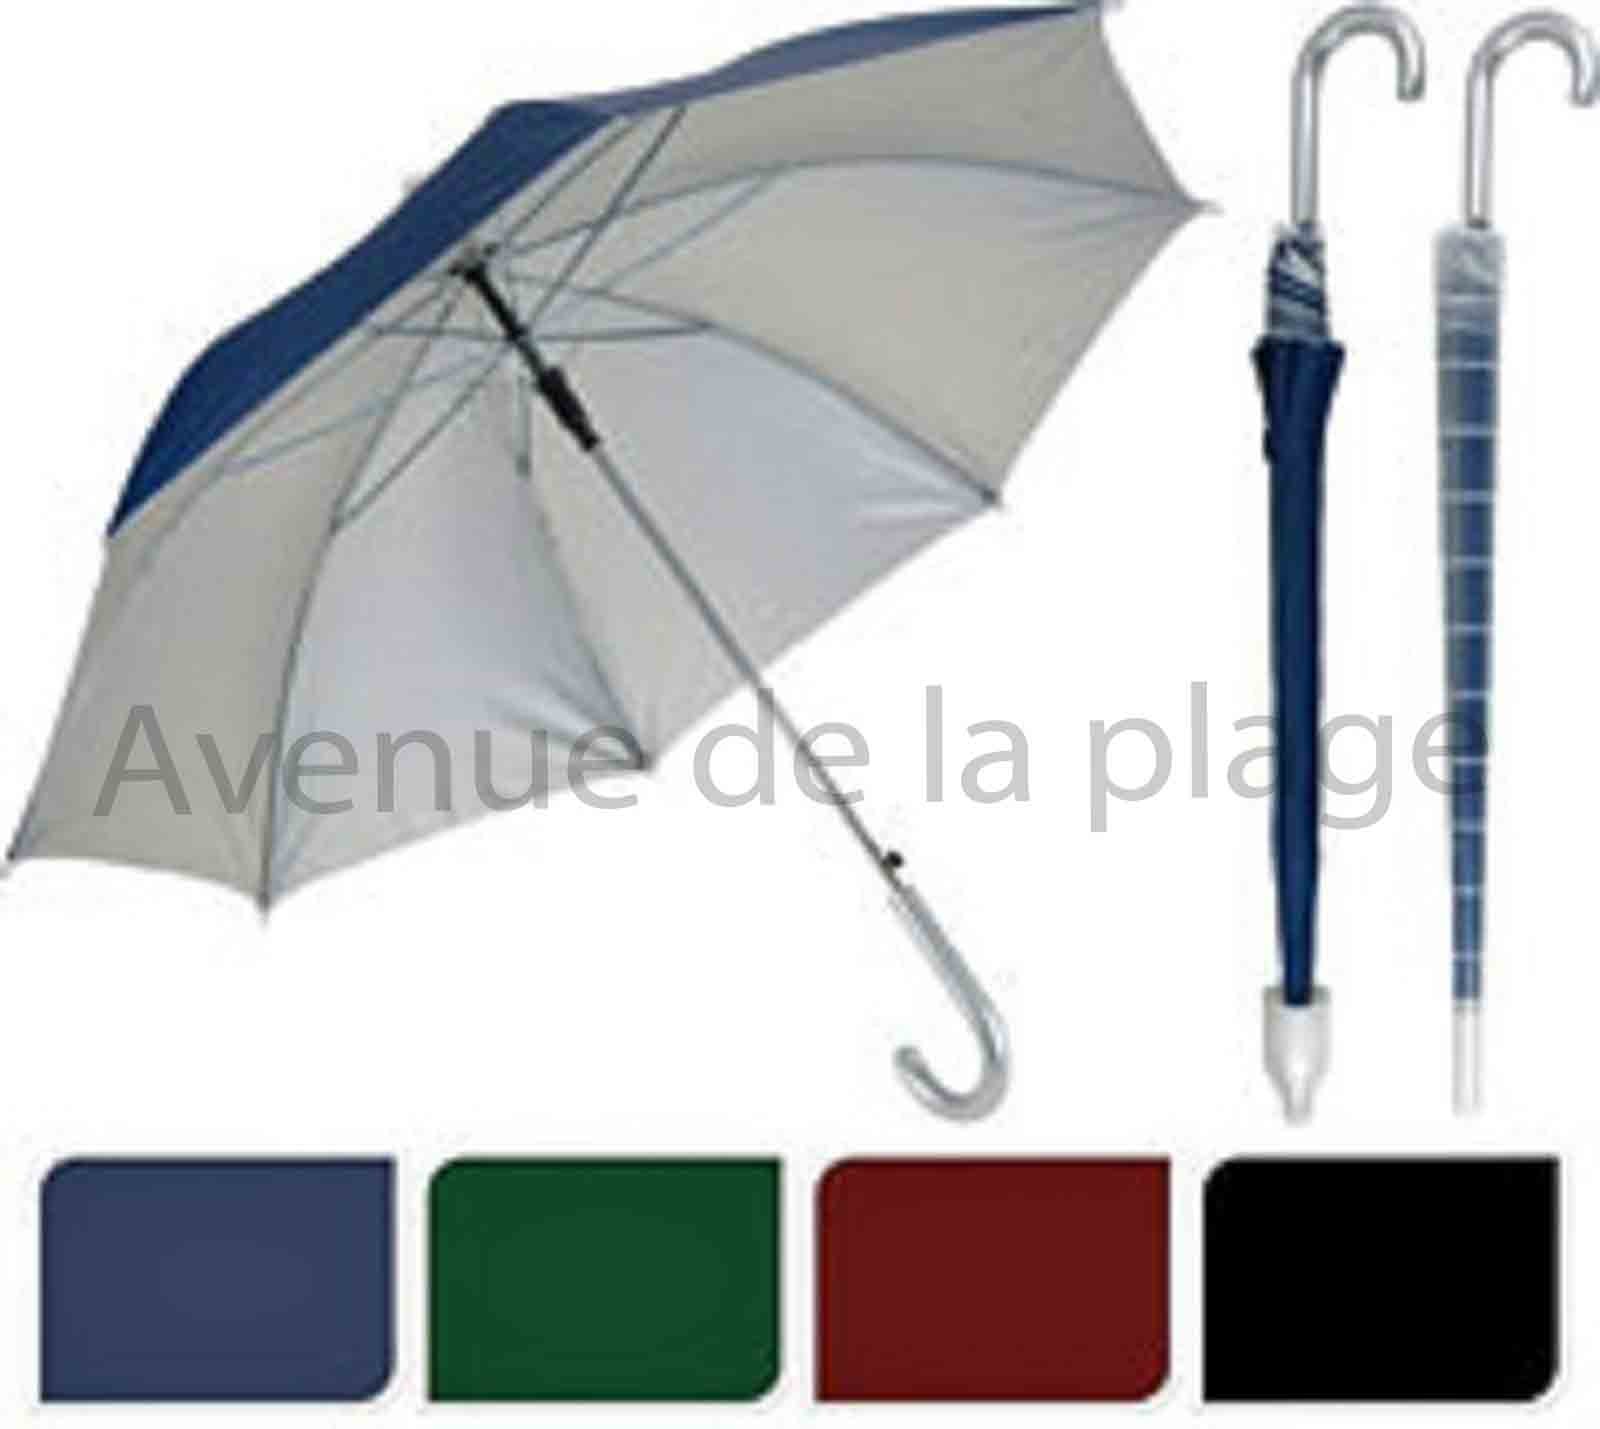 I love Germany Télescopique de poche parapluie parapluie parapluie #1 